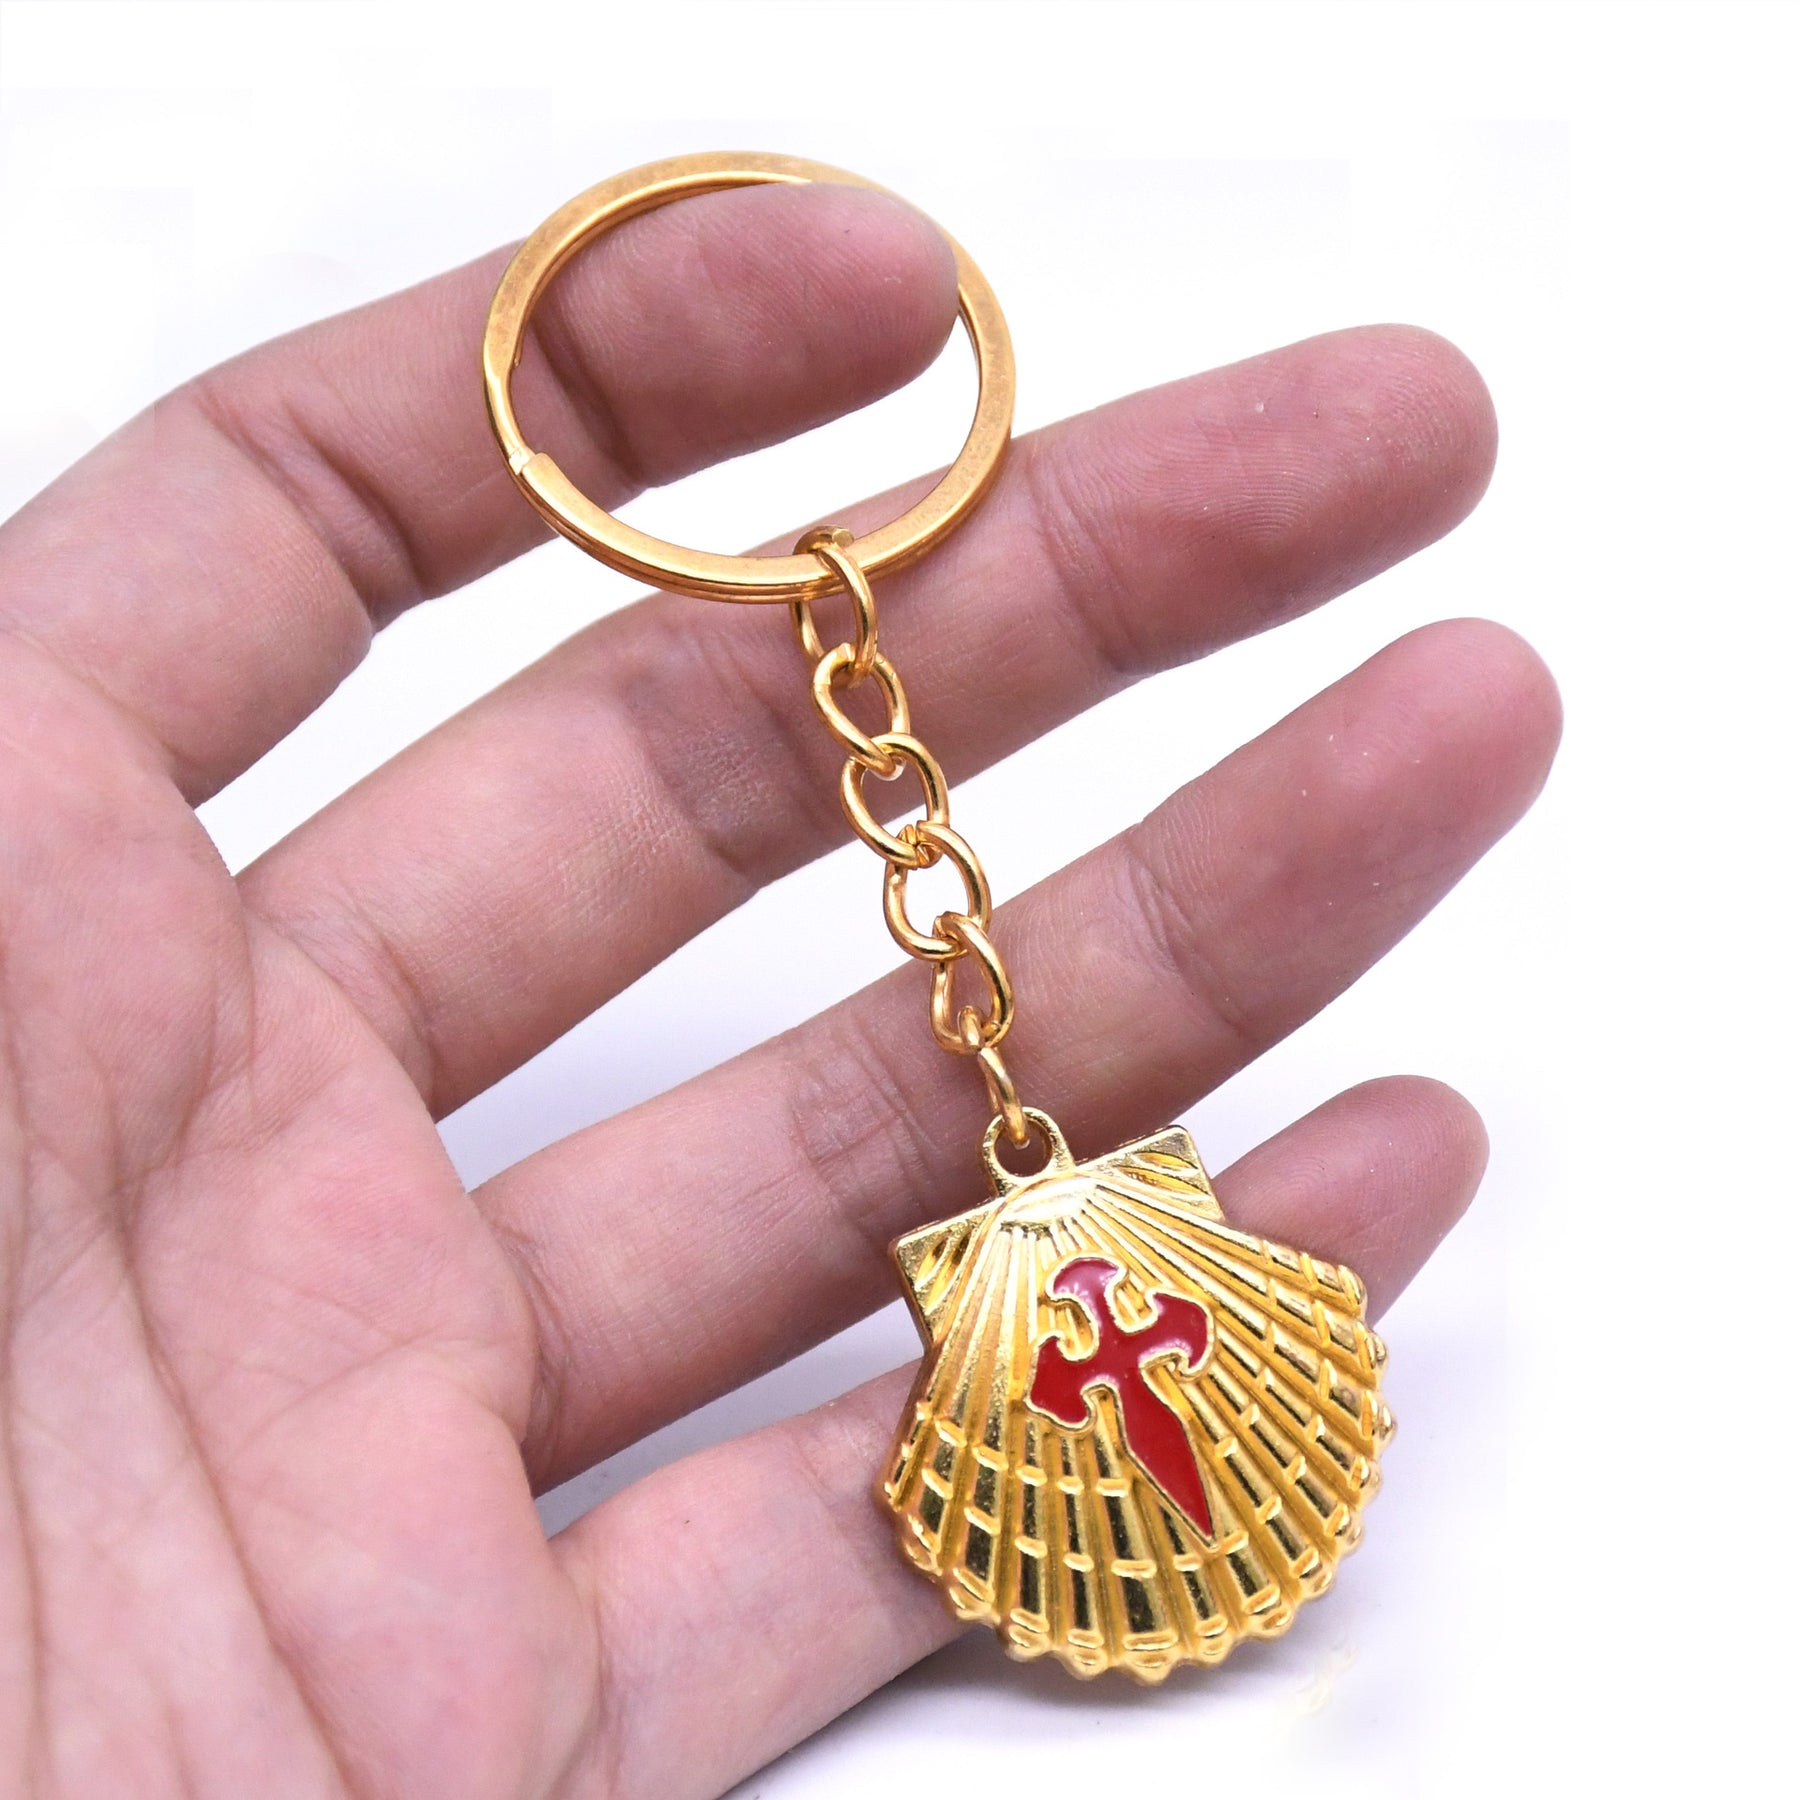 St. Thomas of Acon Keychain - Gold Cross Shell Cross Pendant - Bricks Masons